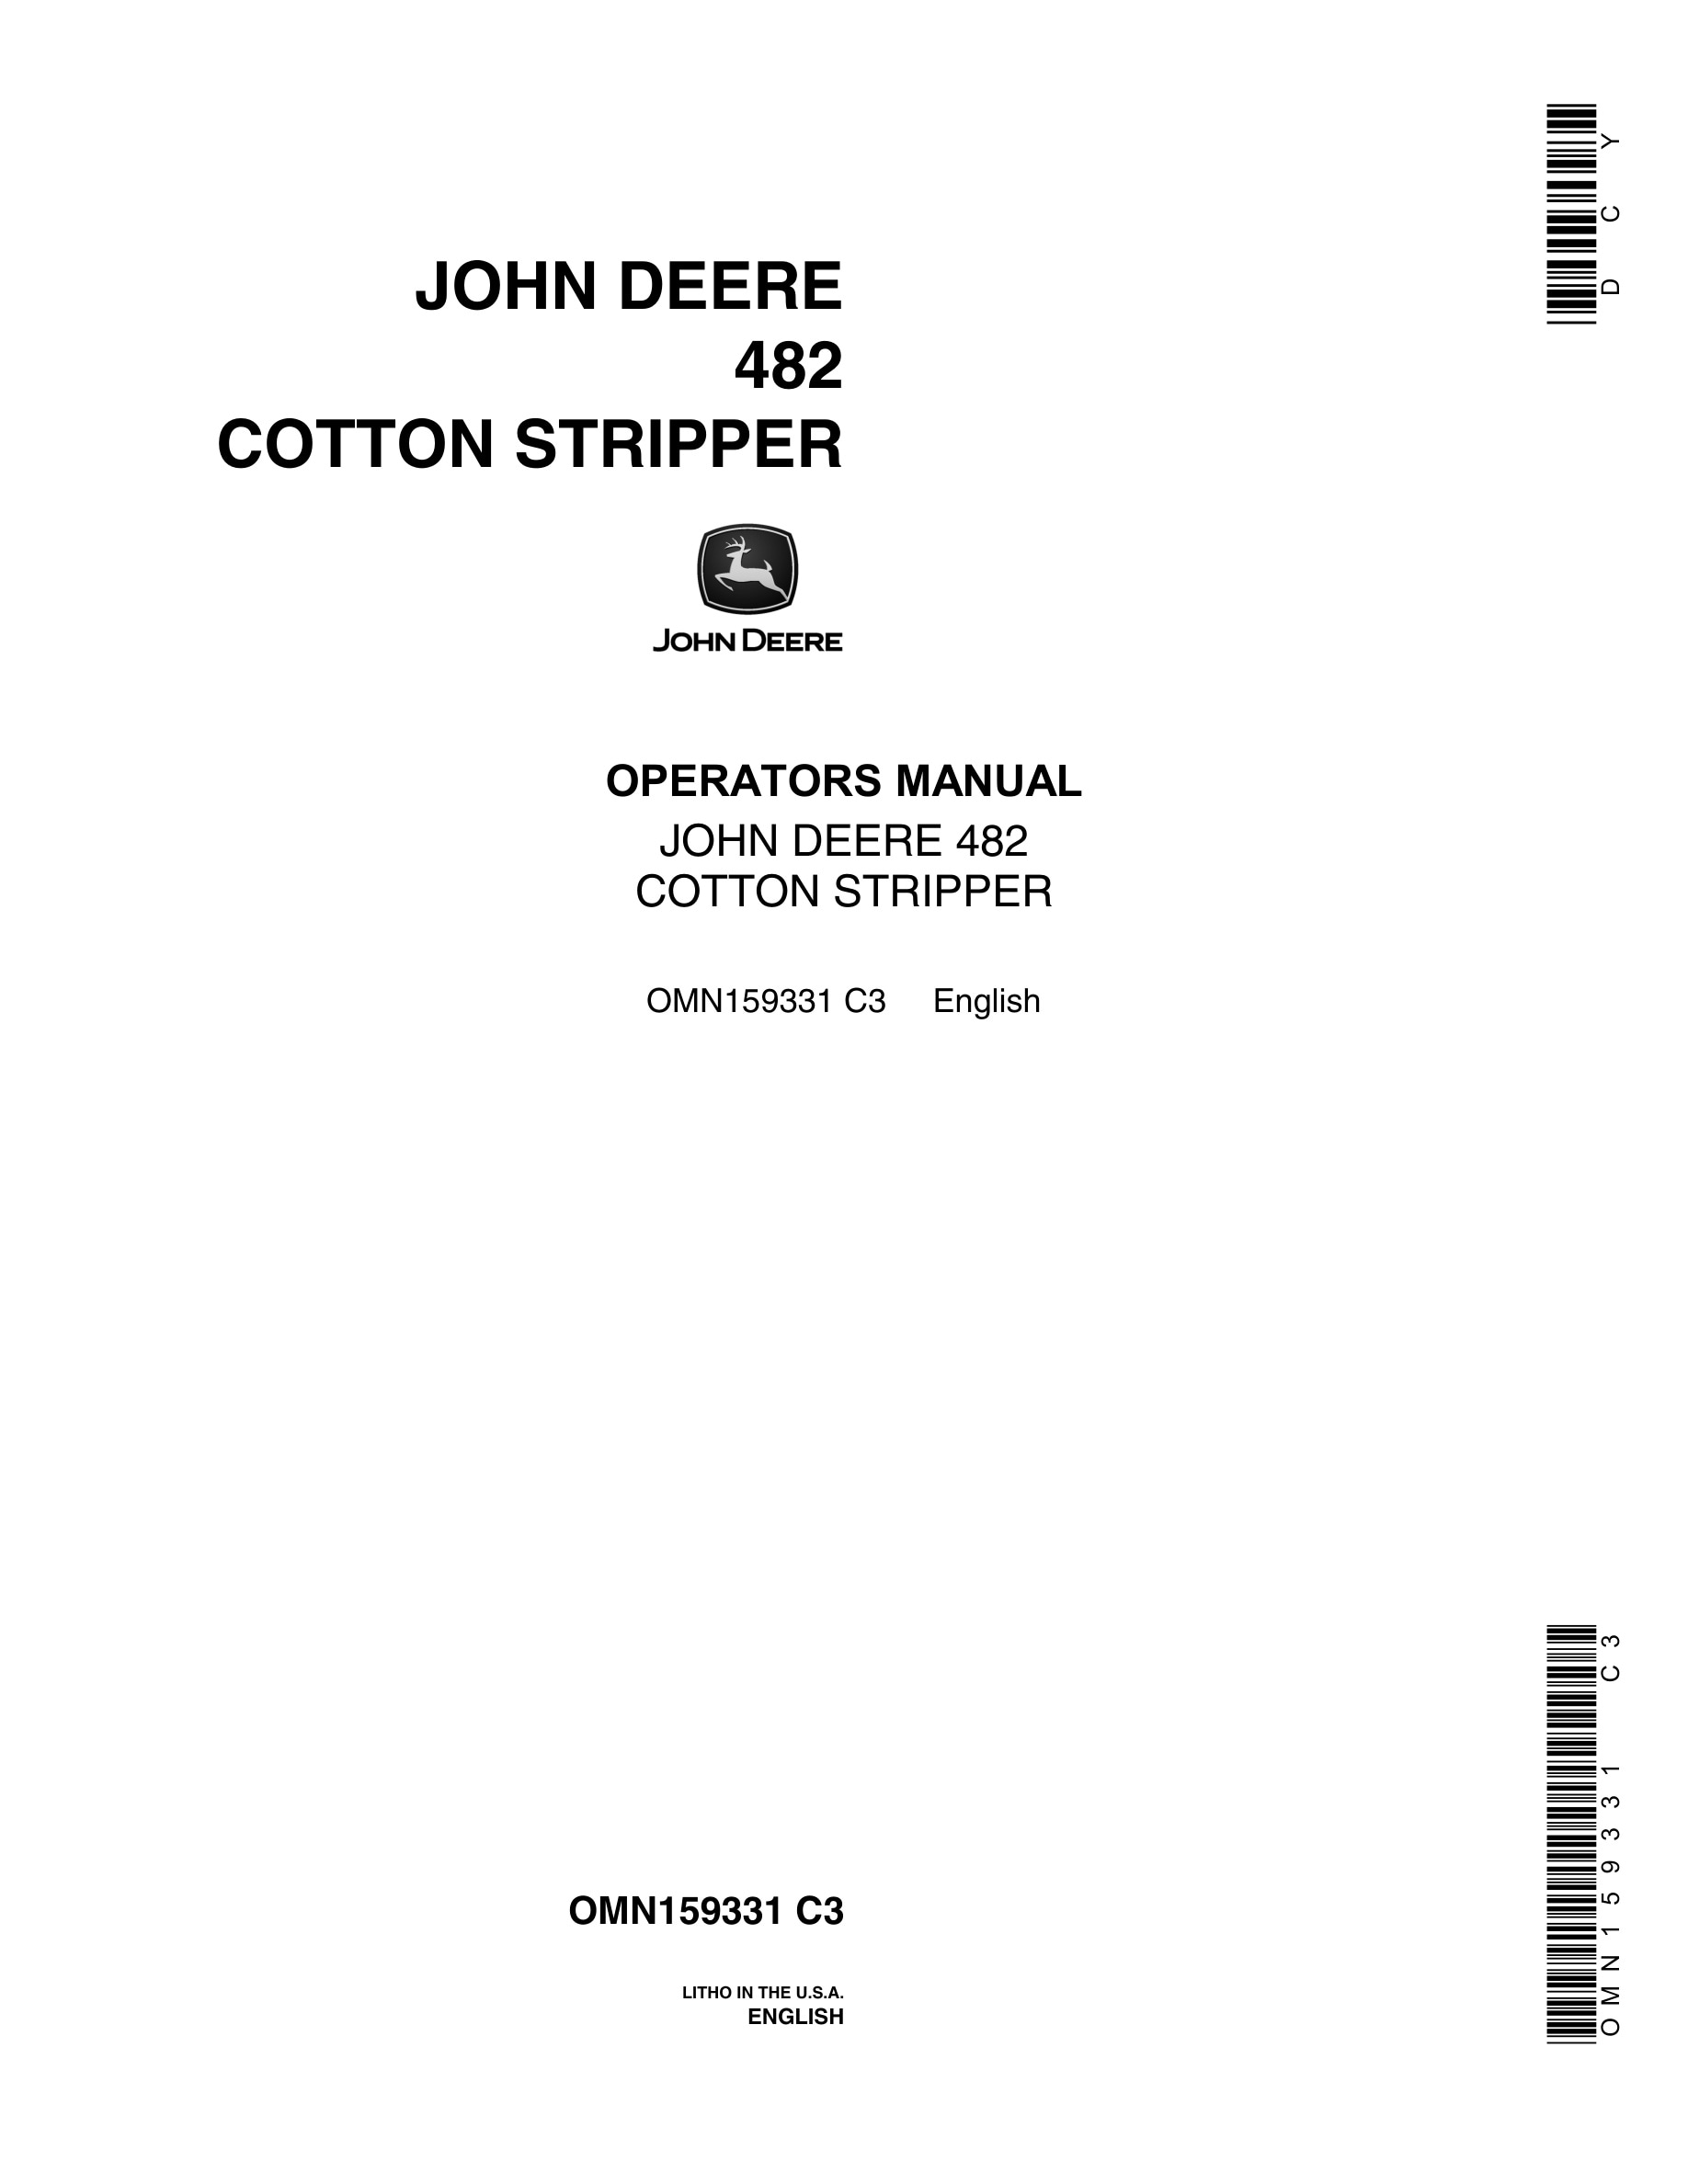 John Deere 482 Cotton Sripper Operator Manual OMN159331-1